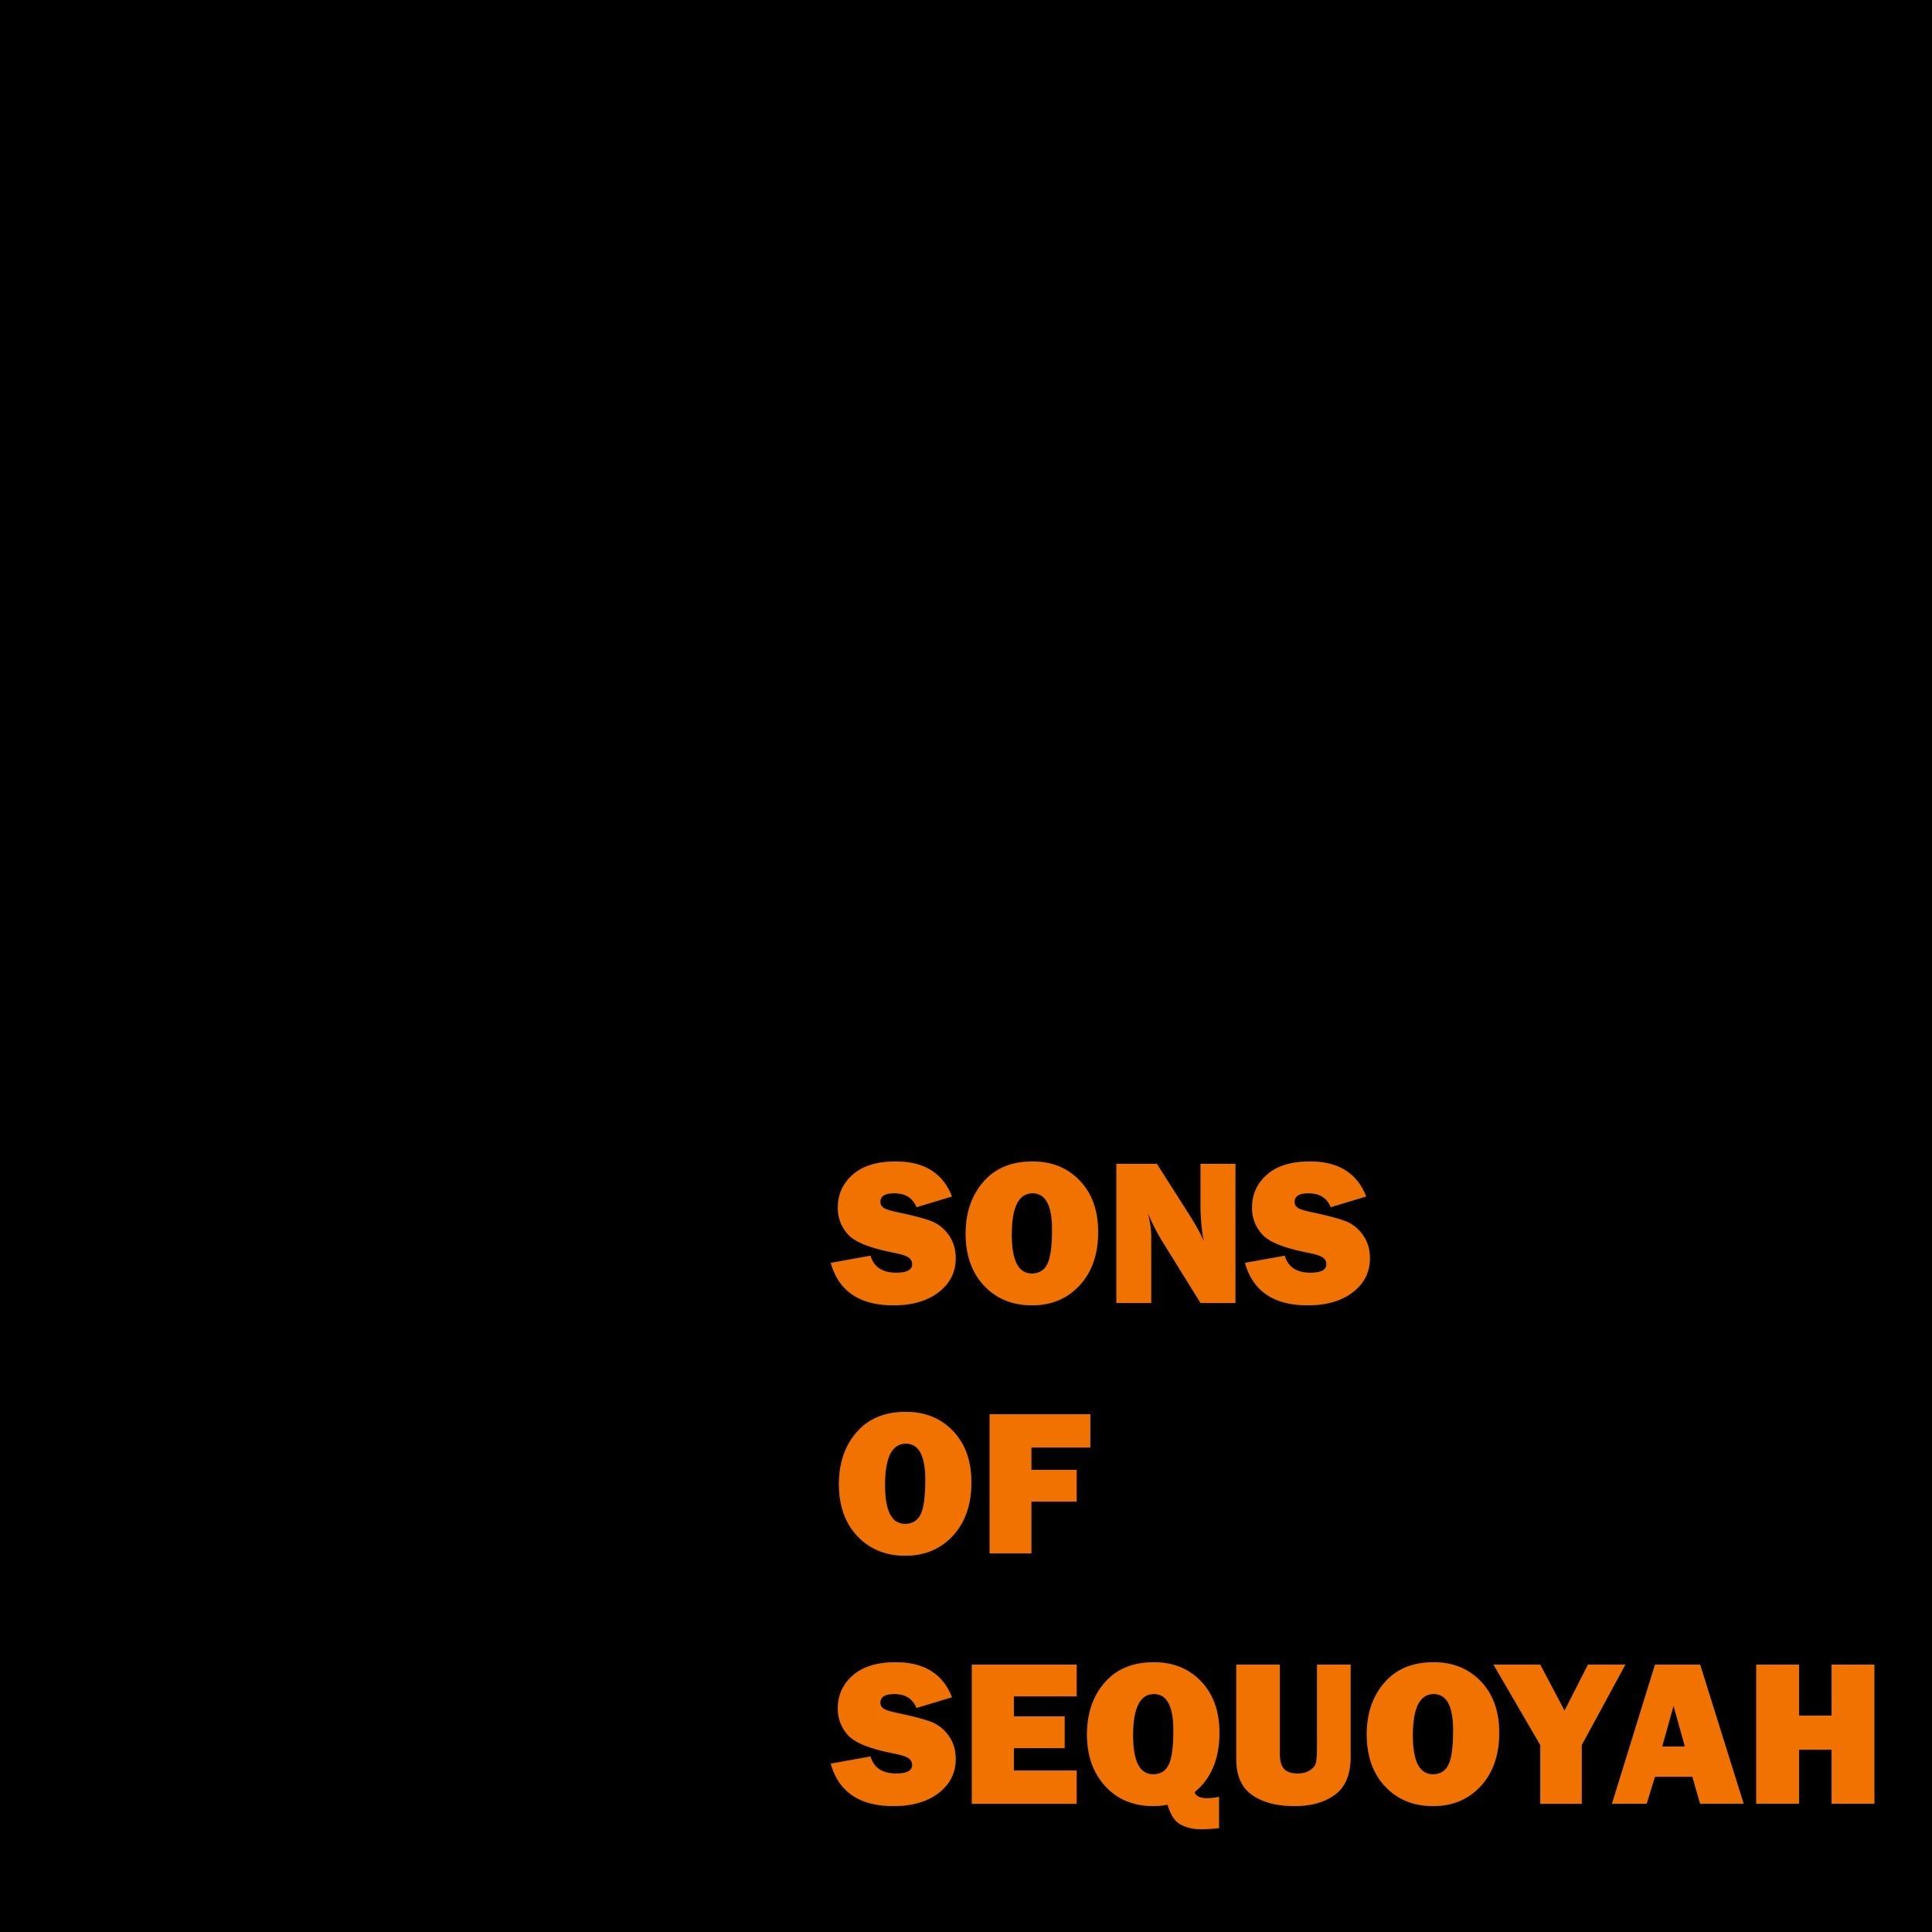 Sons of Sequoyah